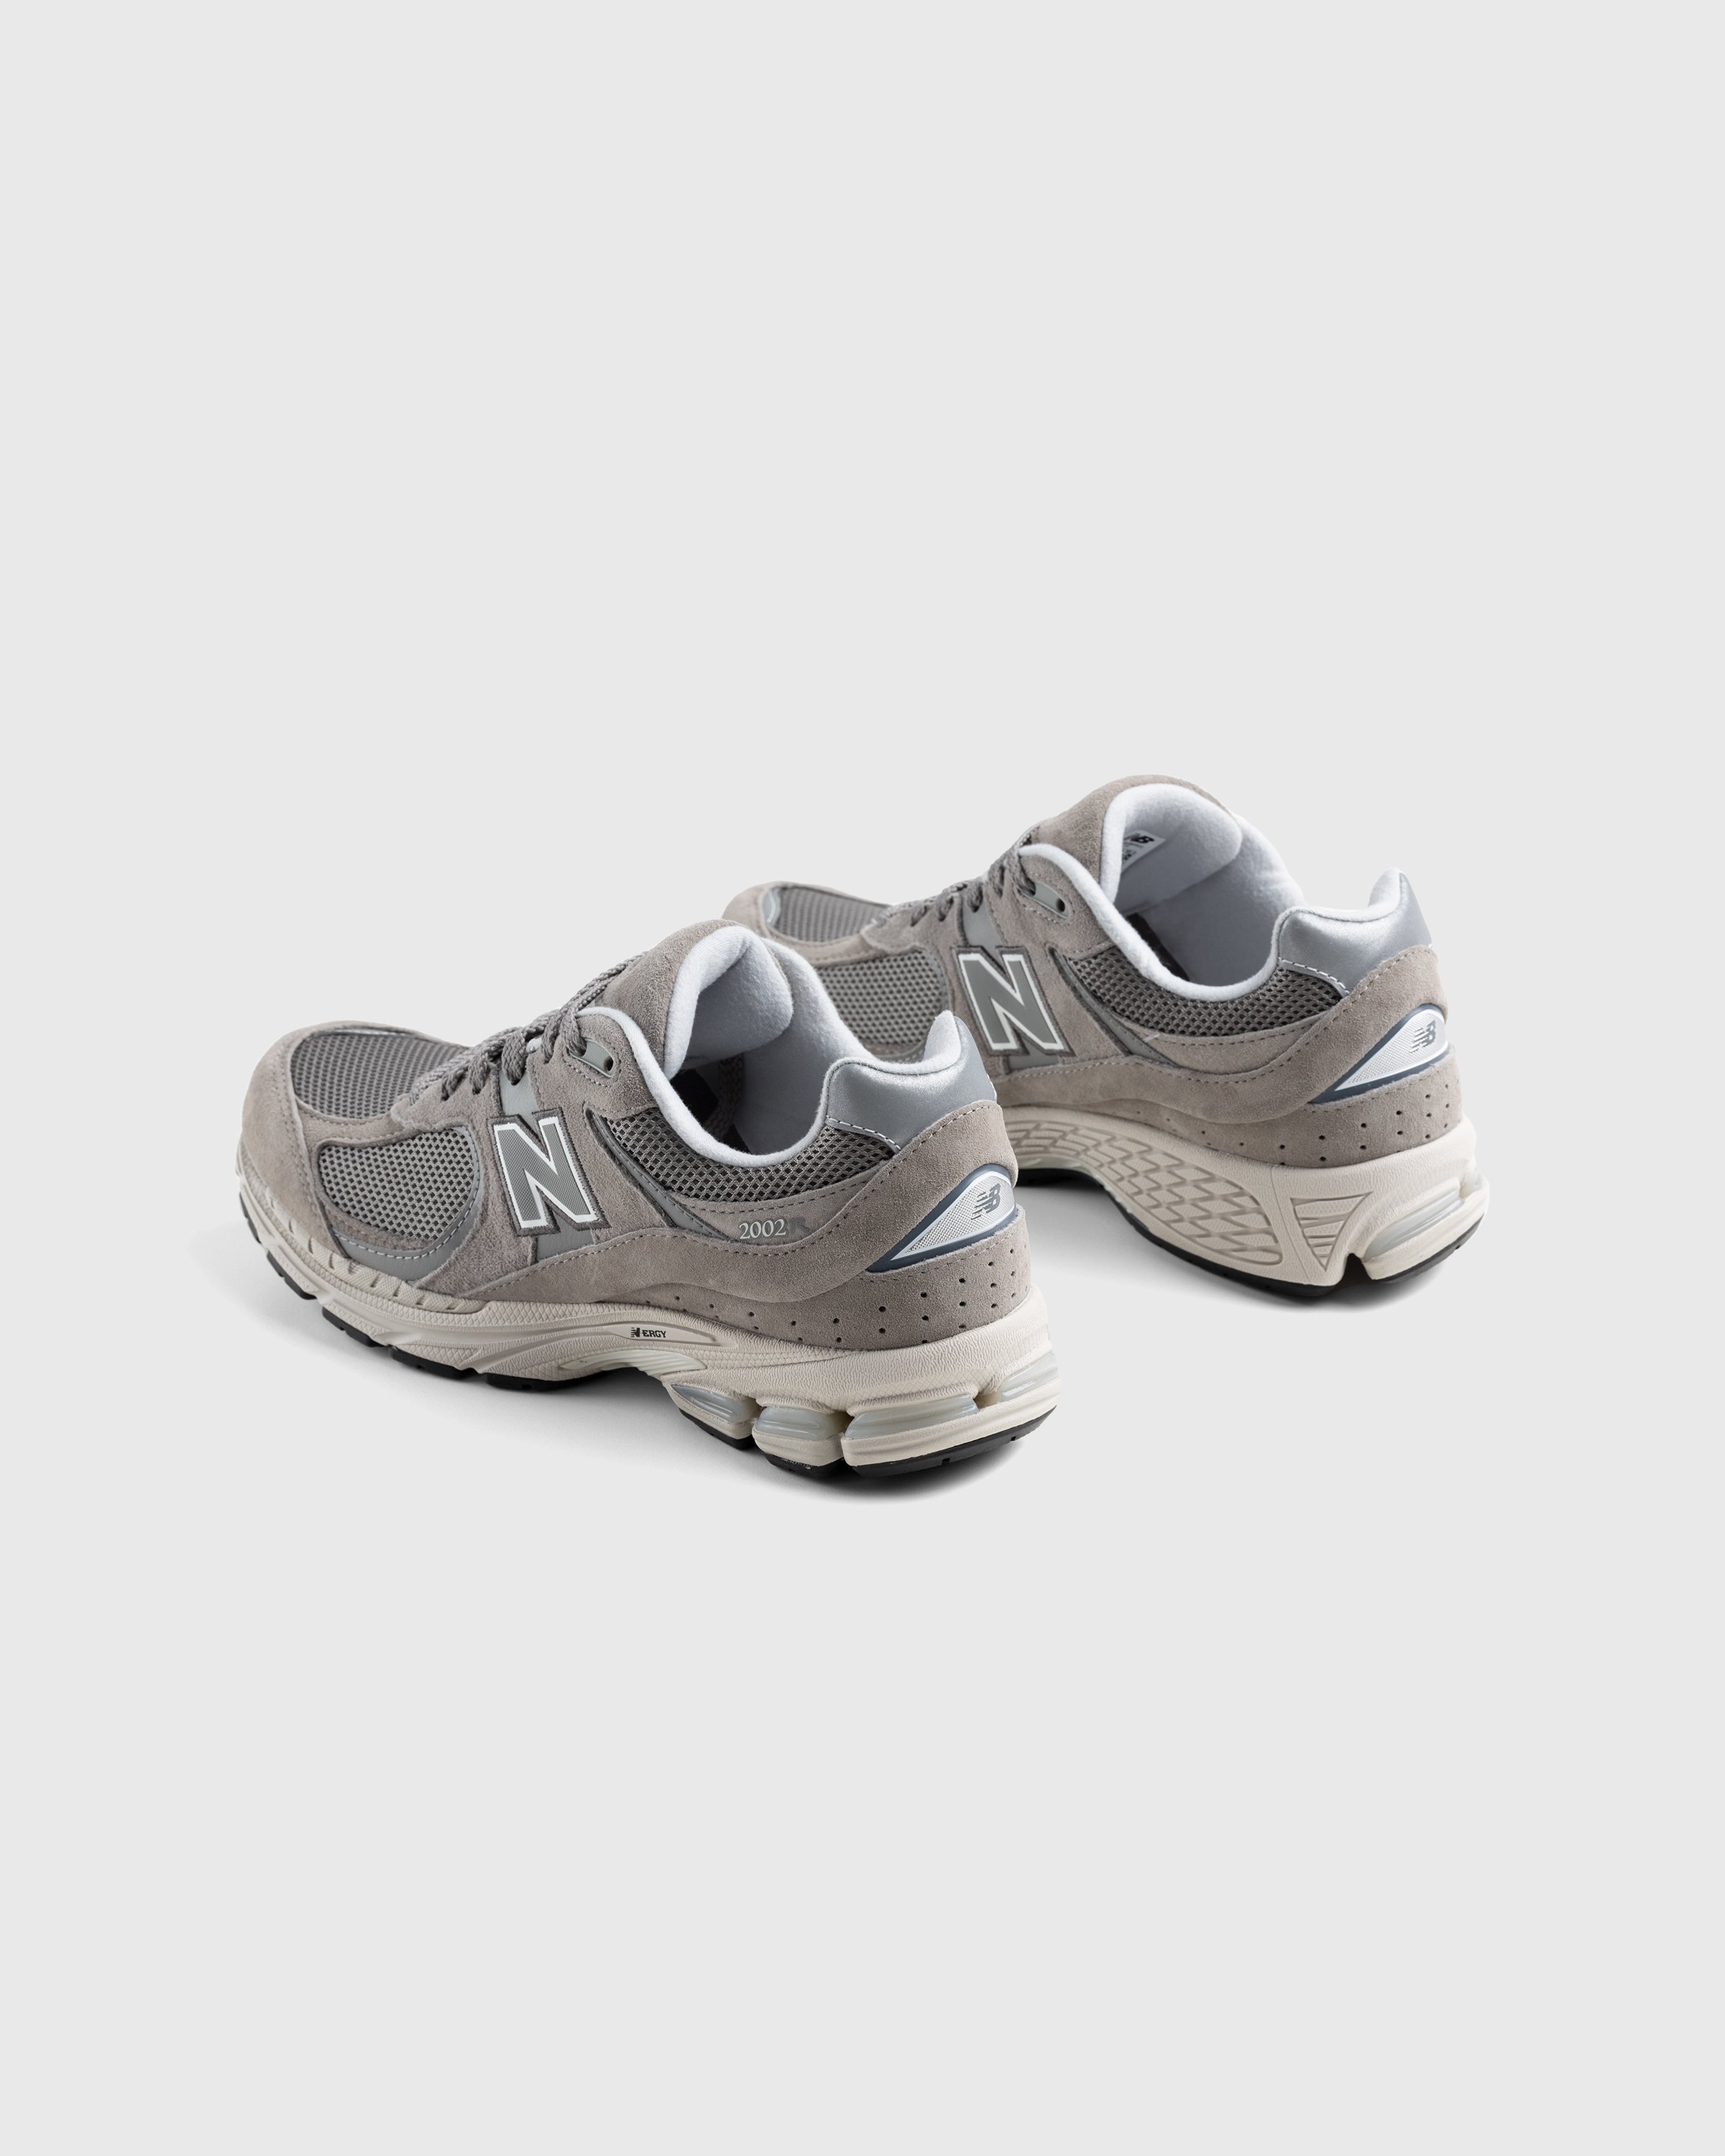 New Balance - ML2002RC Marblehead - Footwear - Brown - Image 4